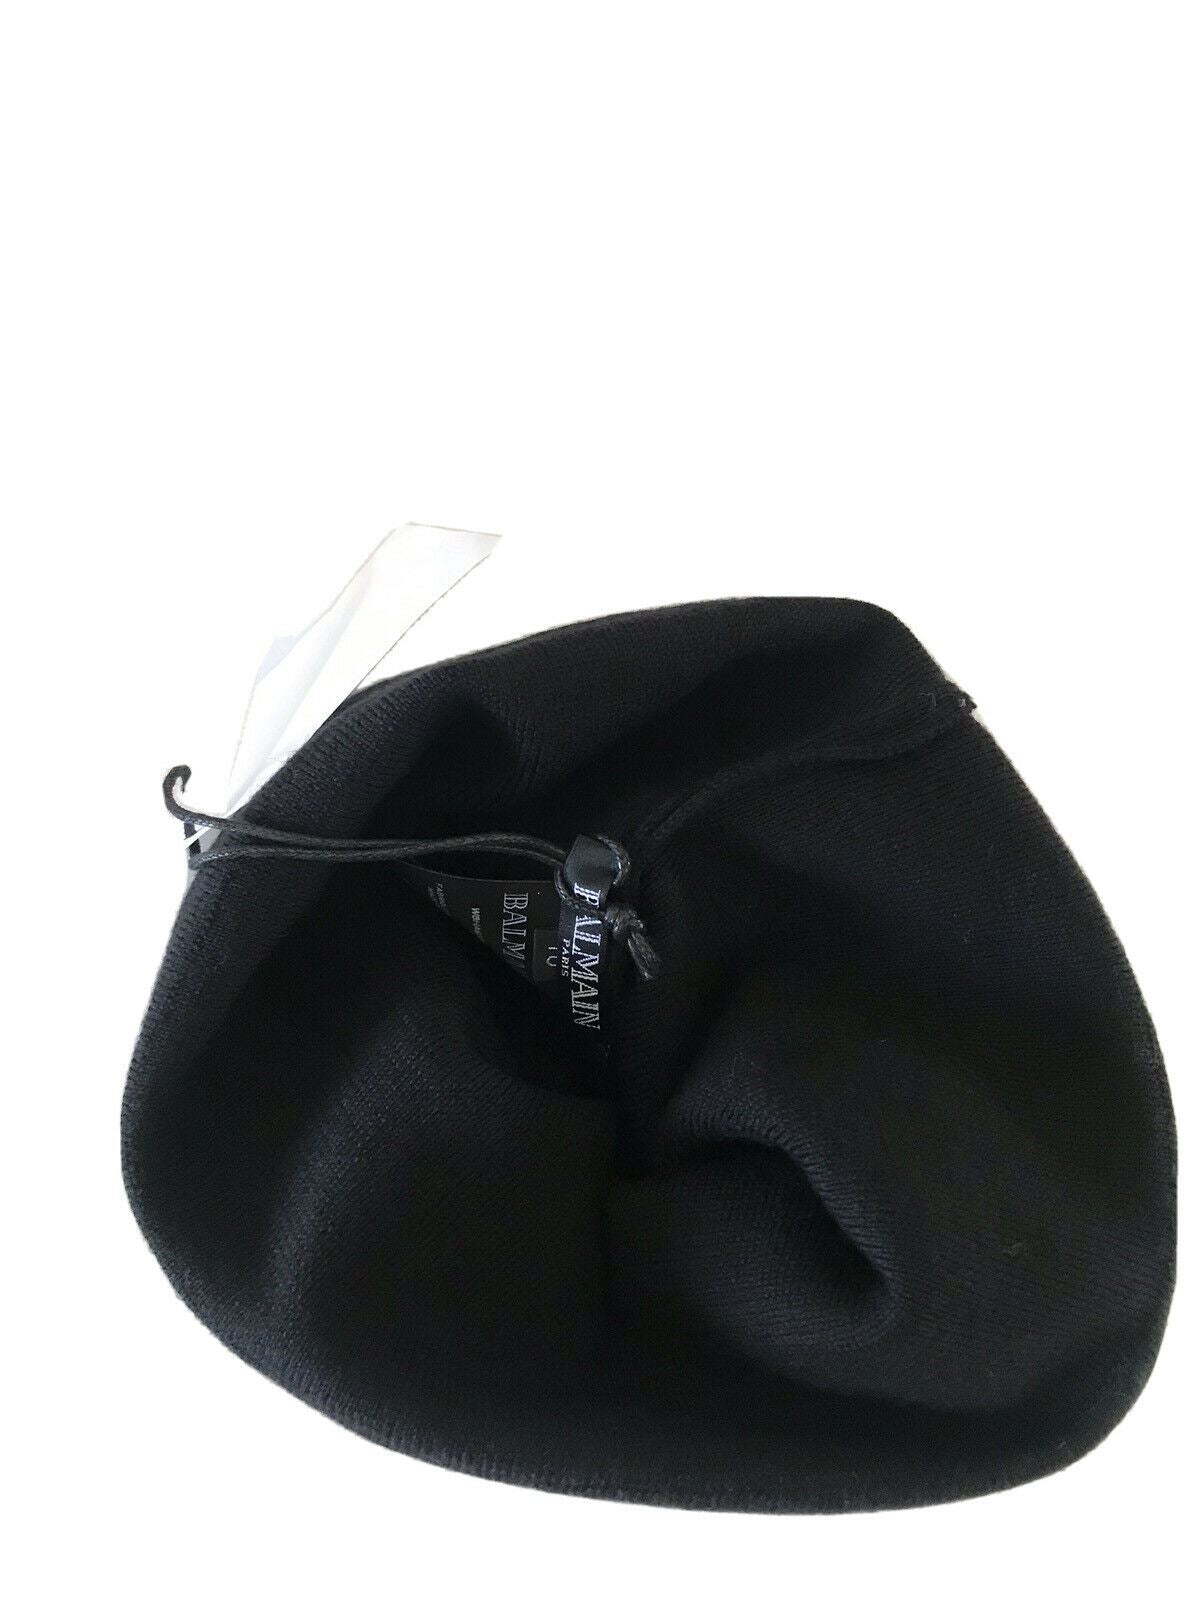 NWT $520 Balmain Logo Beanie Hat Black/White One Size